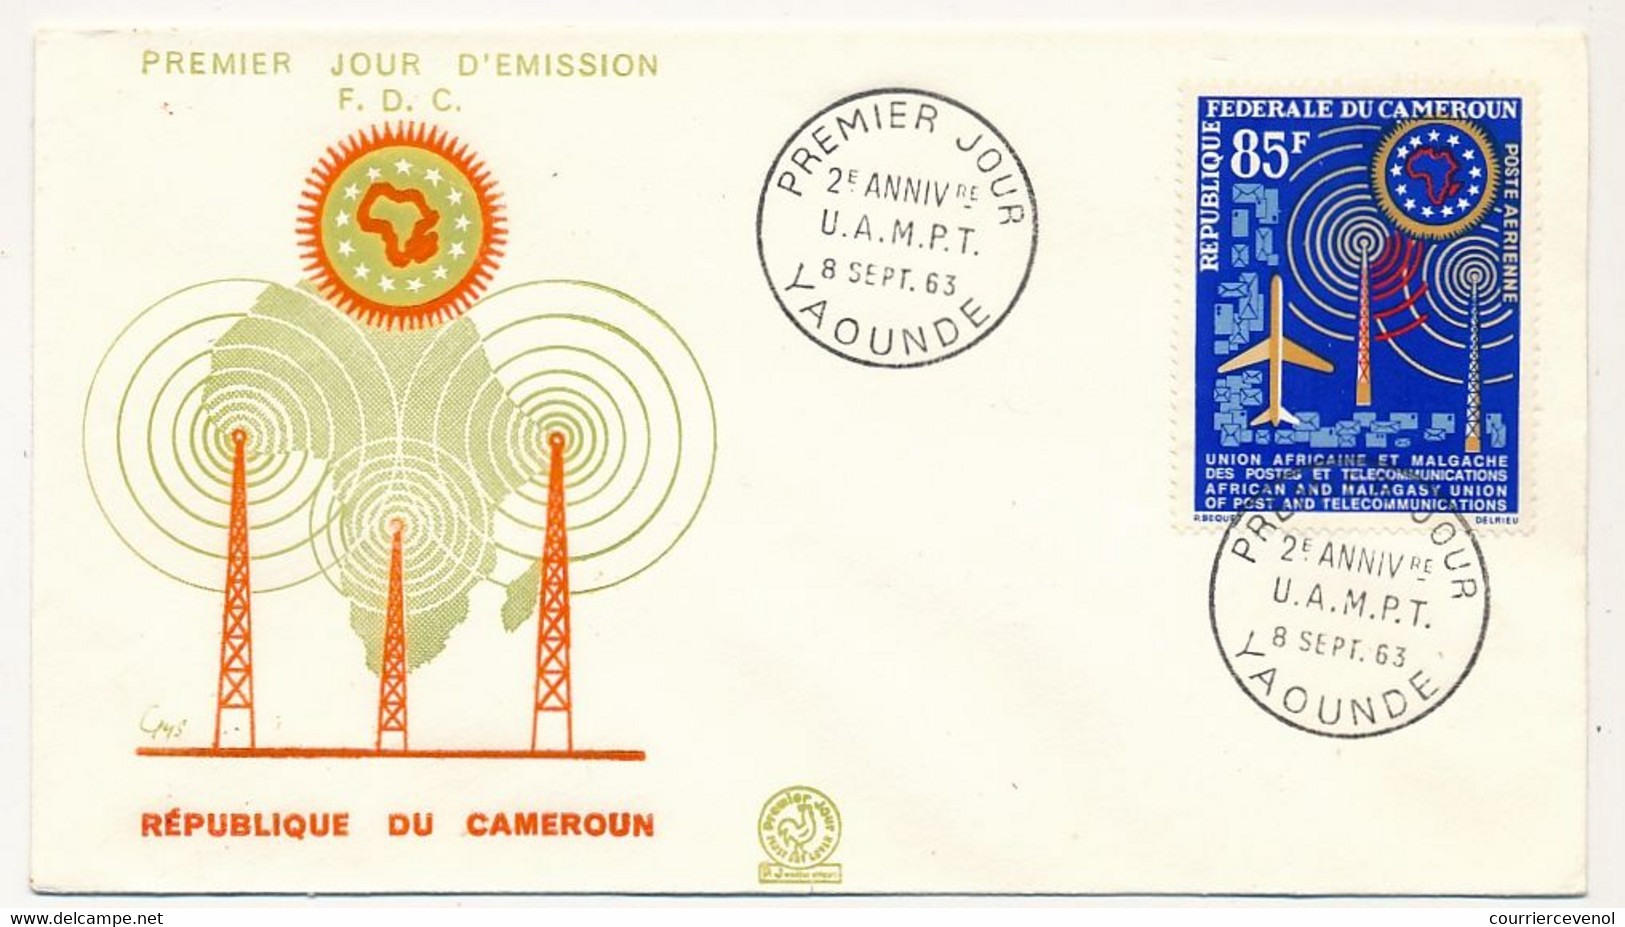 CAMEROUN => Enveloppe FDC - 85F 2eme Anniversaire UAMPT - 8 Sept 1983 - Yaoundé - Kameroen (1960-...)